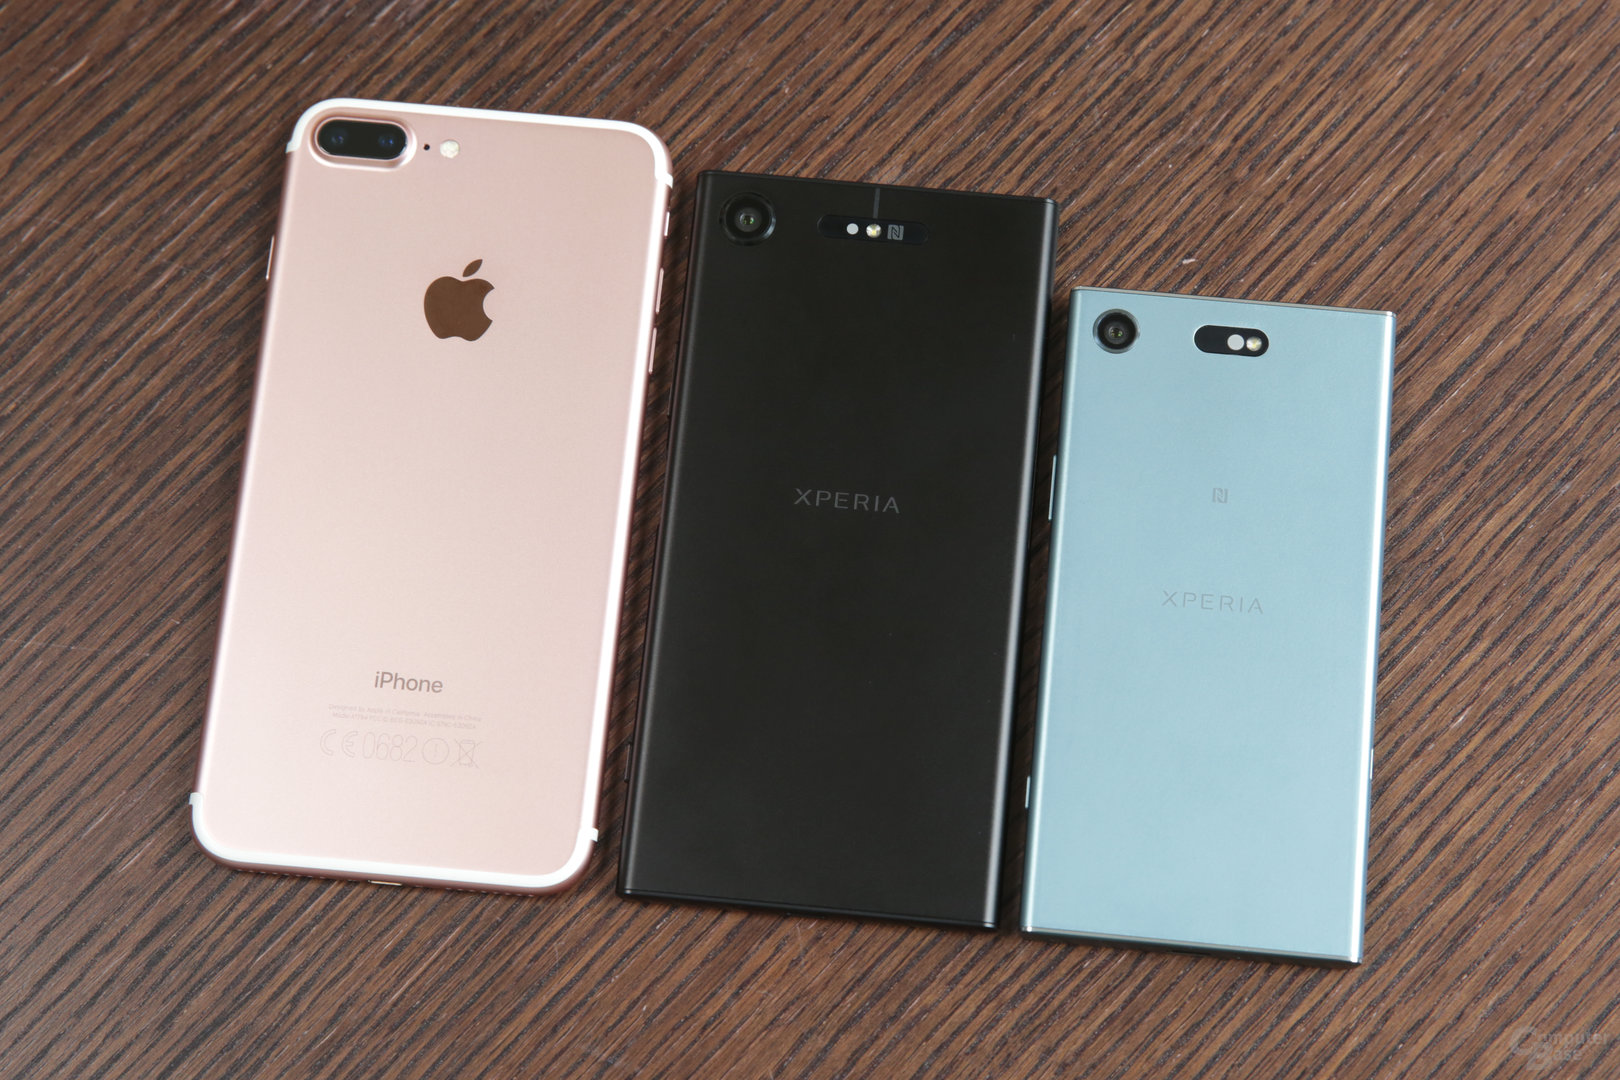 iPhone 7 Plus neben Xperia XZ1 und XZ1 Compact